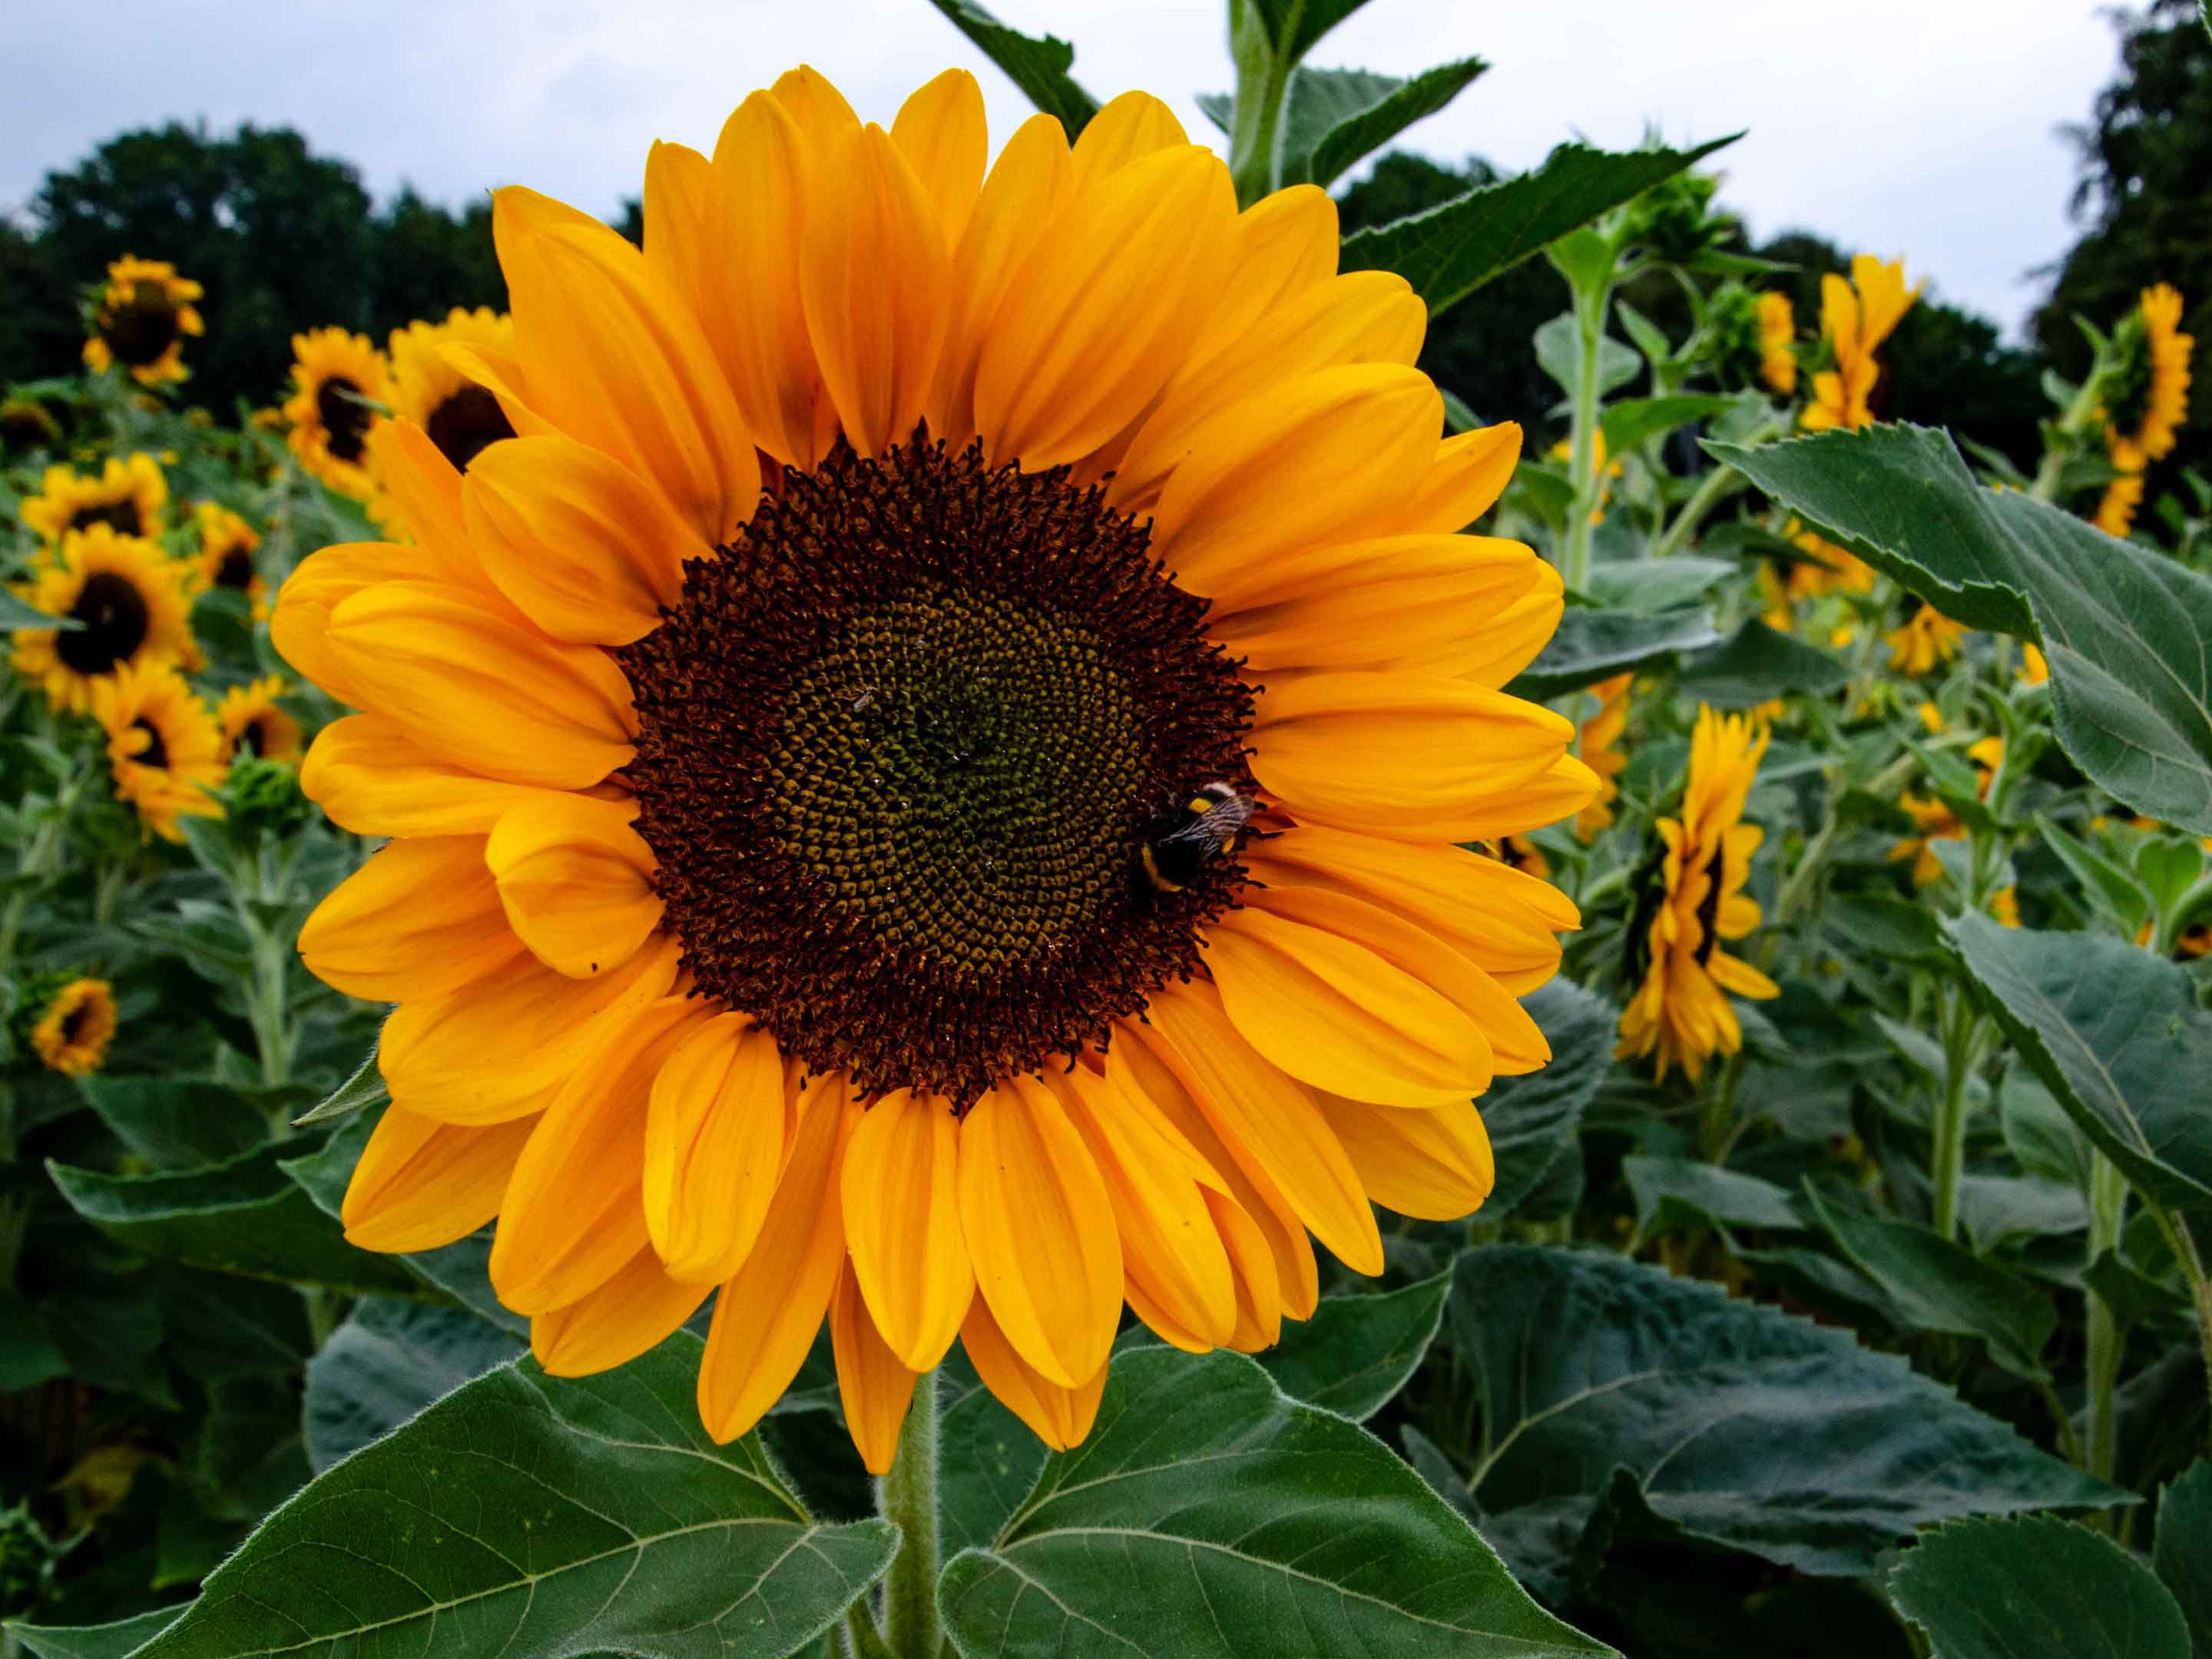 https://www.compo.de/dam/jcr:fdbba870-e002-430c-8b2e-c635fcc8074e/sunflower-bee_sonneblume-biene.jpg?x=50&y=50